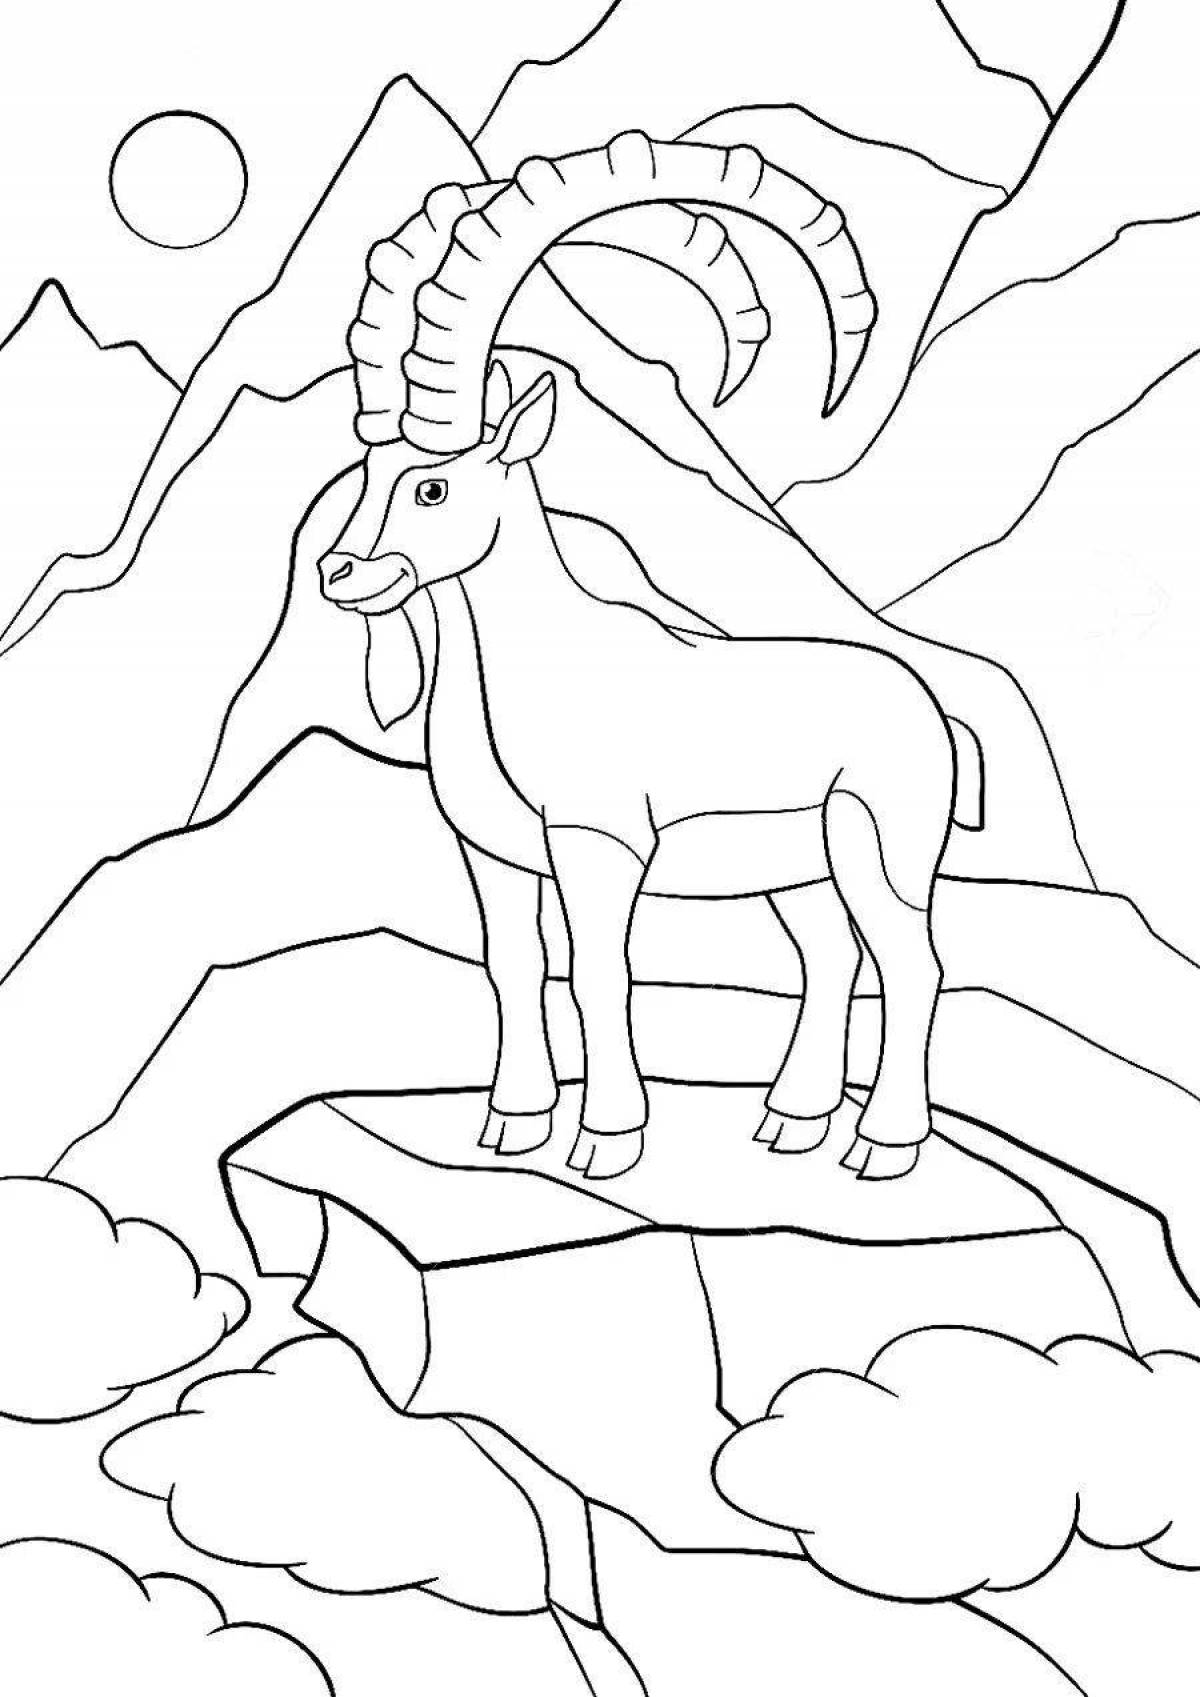 Coloring book joyful mountain goat